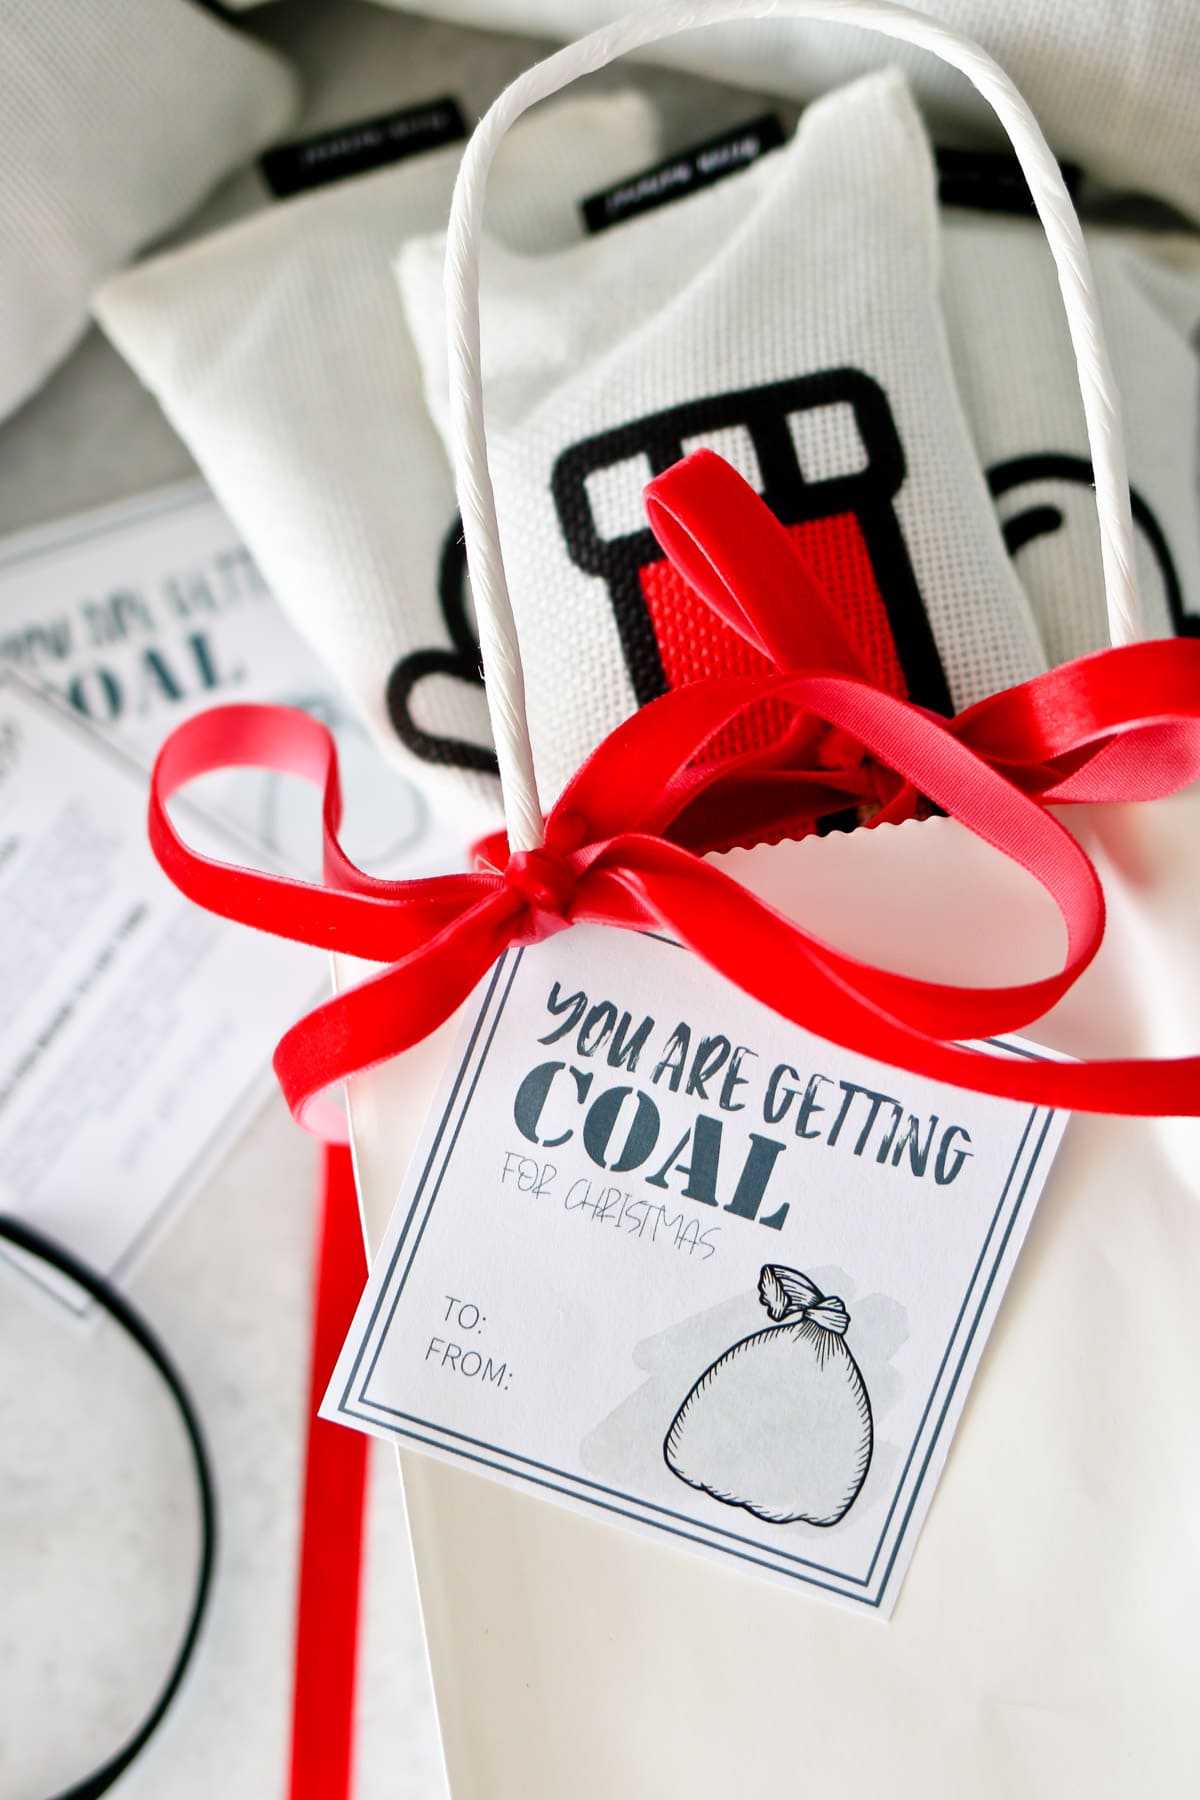 You are getting coal for Christmas, FREE printable gift tags.